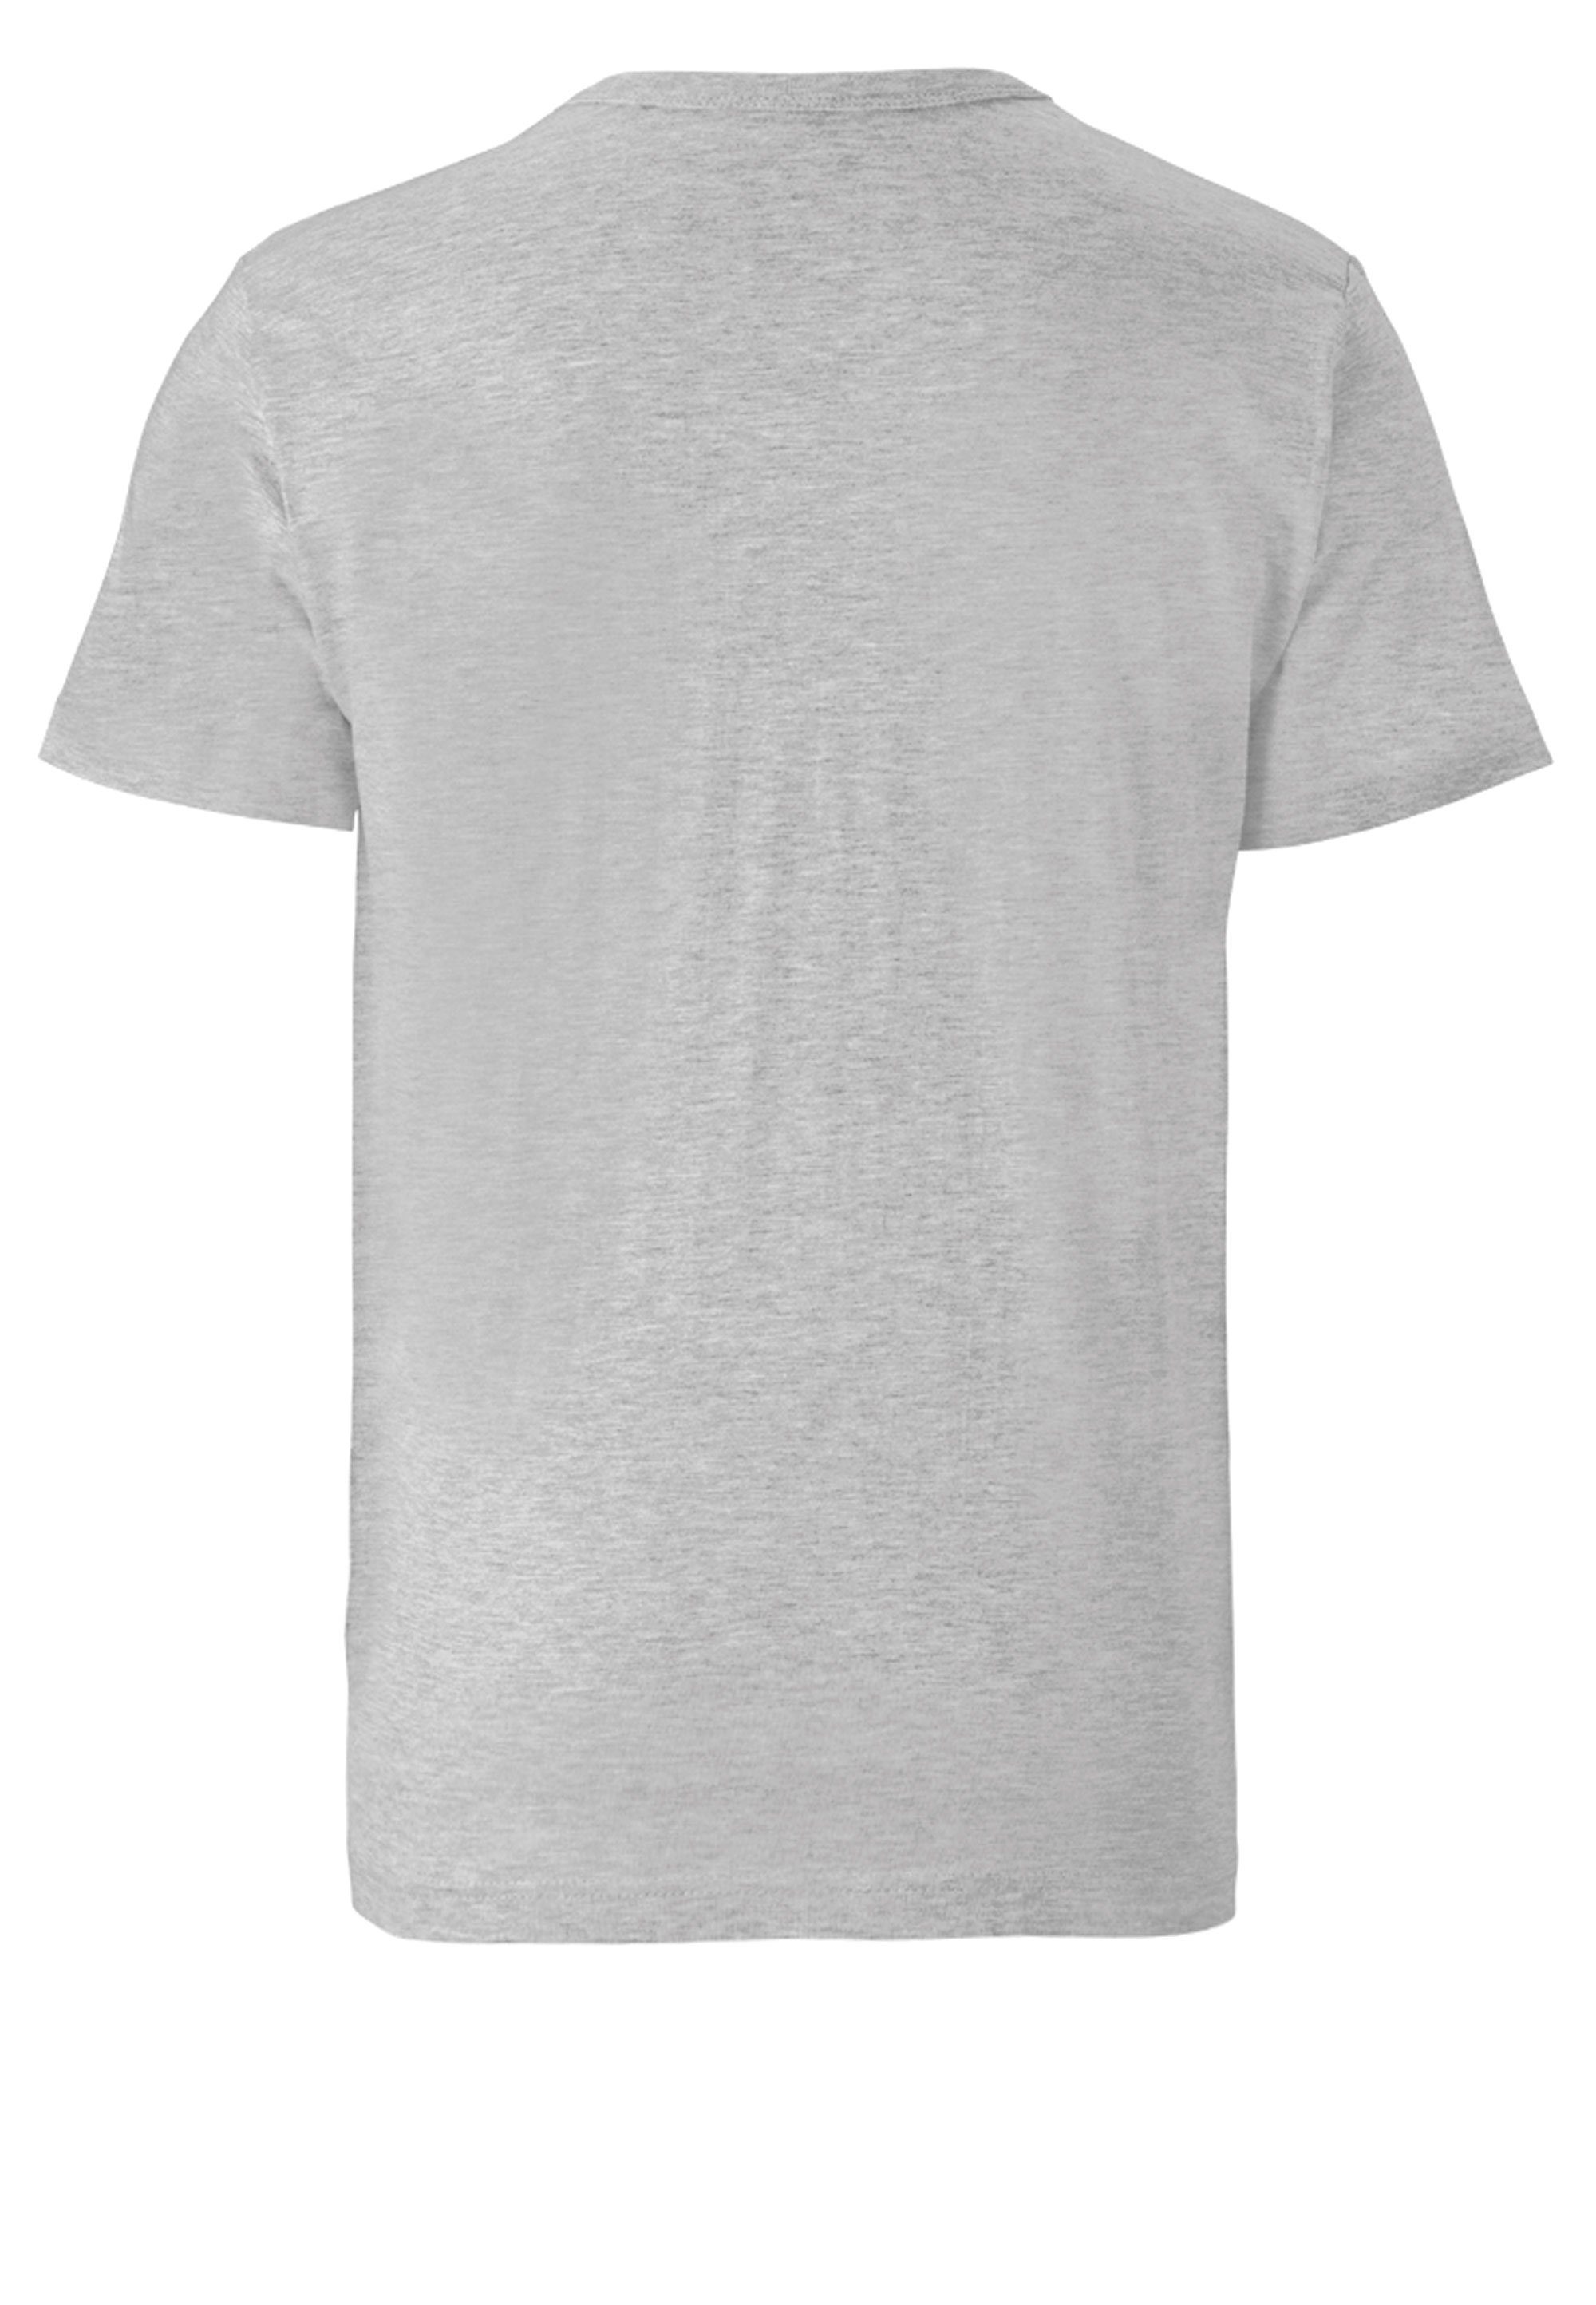 Sesamstrasse Originalddesign lizenziertem LOGOSHIRT mit T-Shirt grau-meliert - Krümelmonster